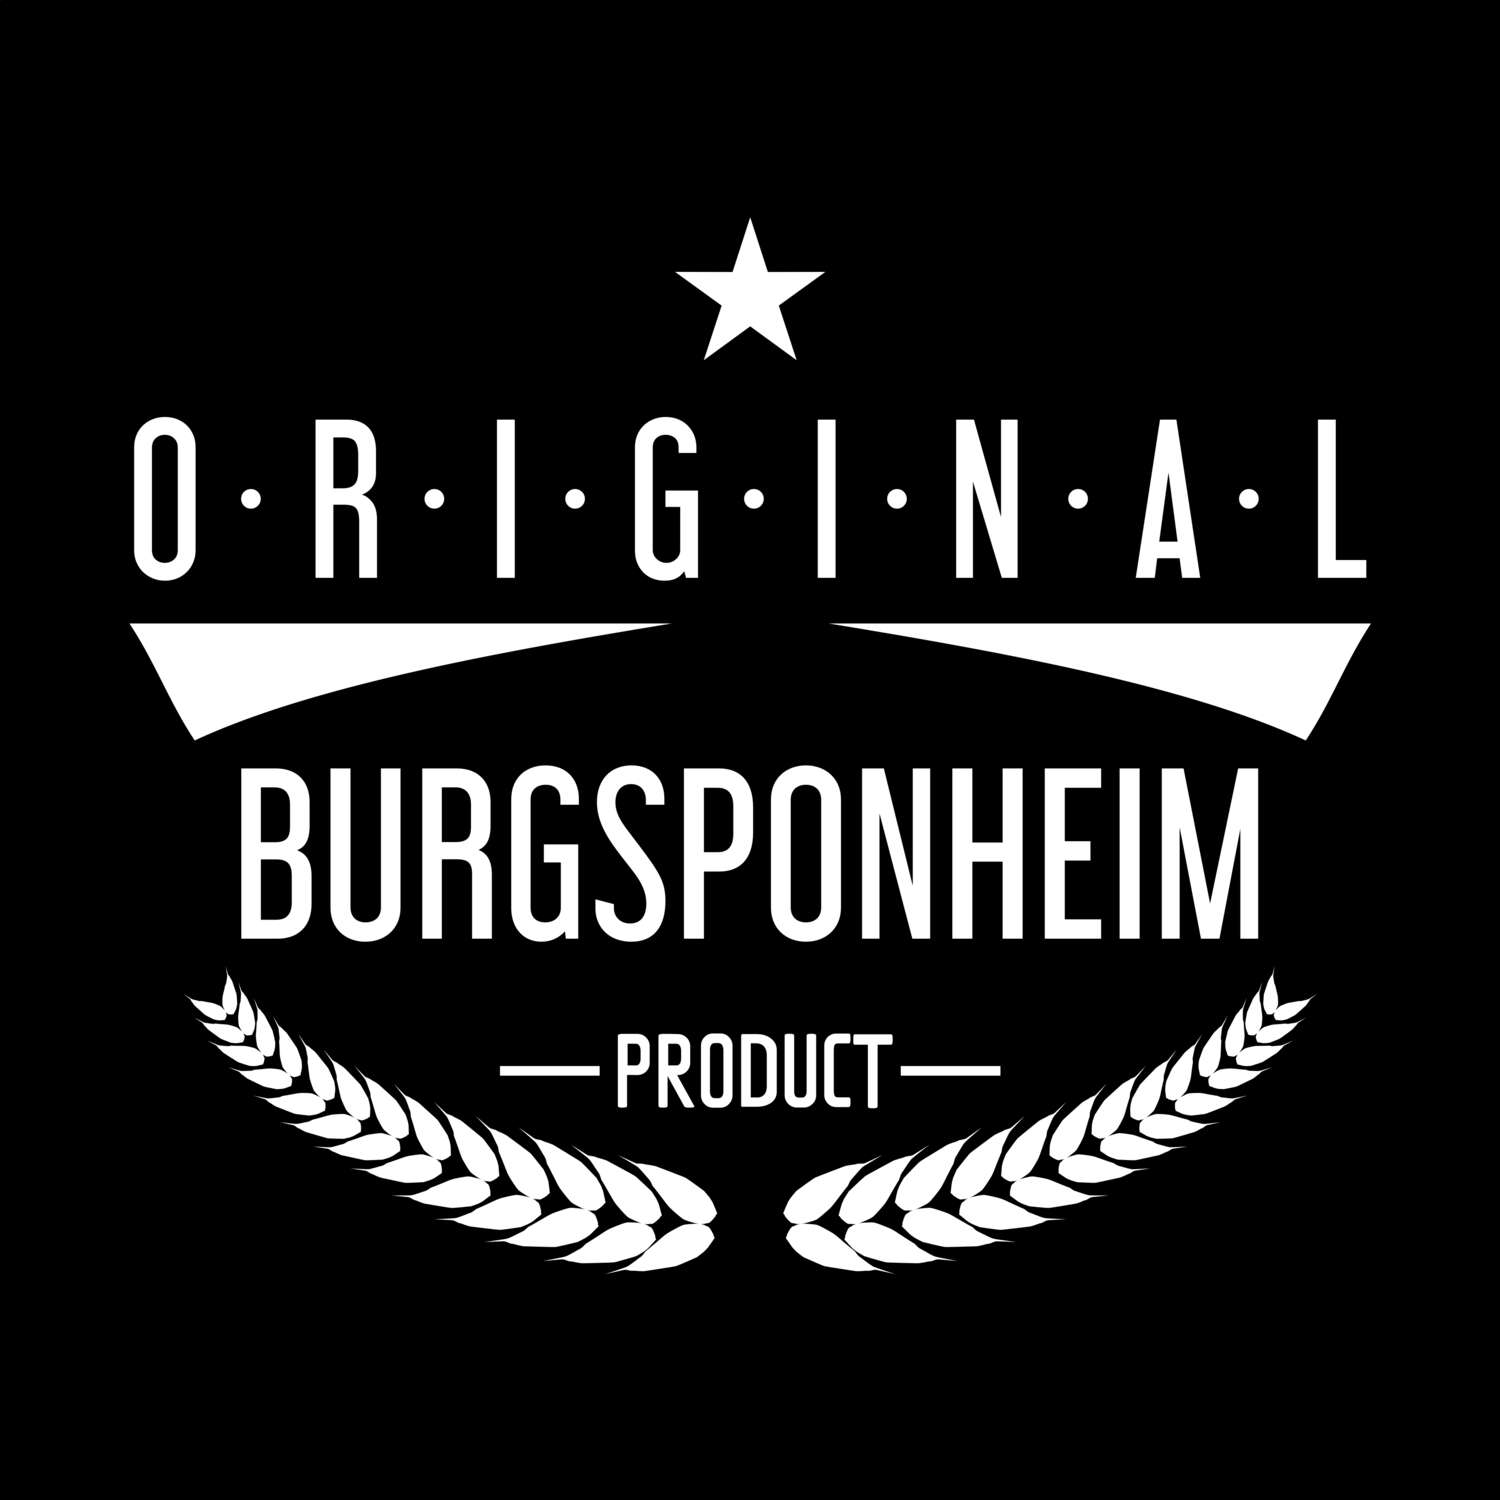 Burgsponheim T-Shirt »Original Product«